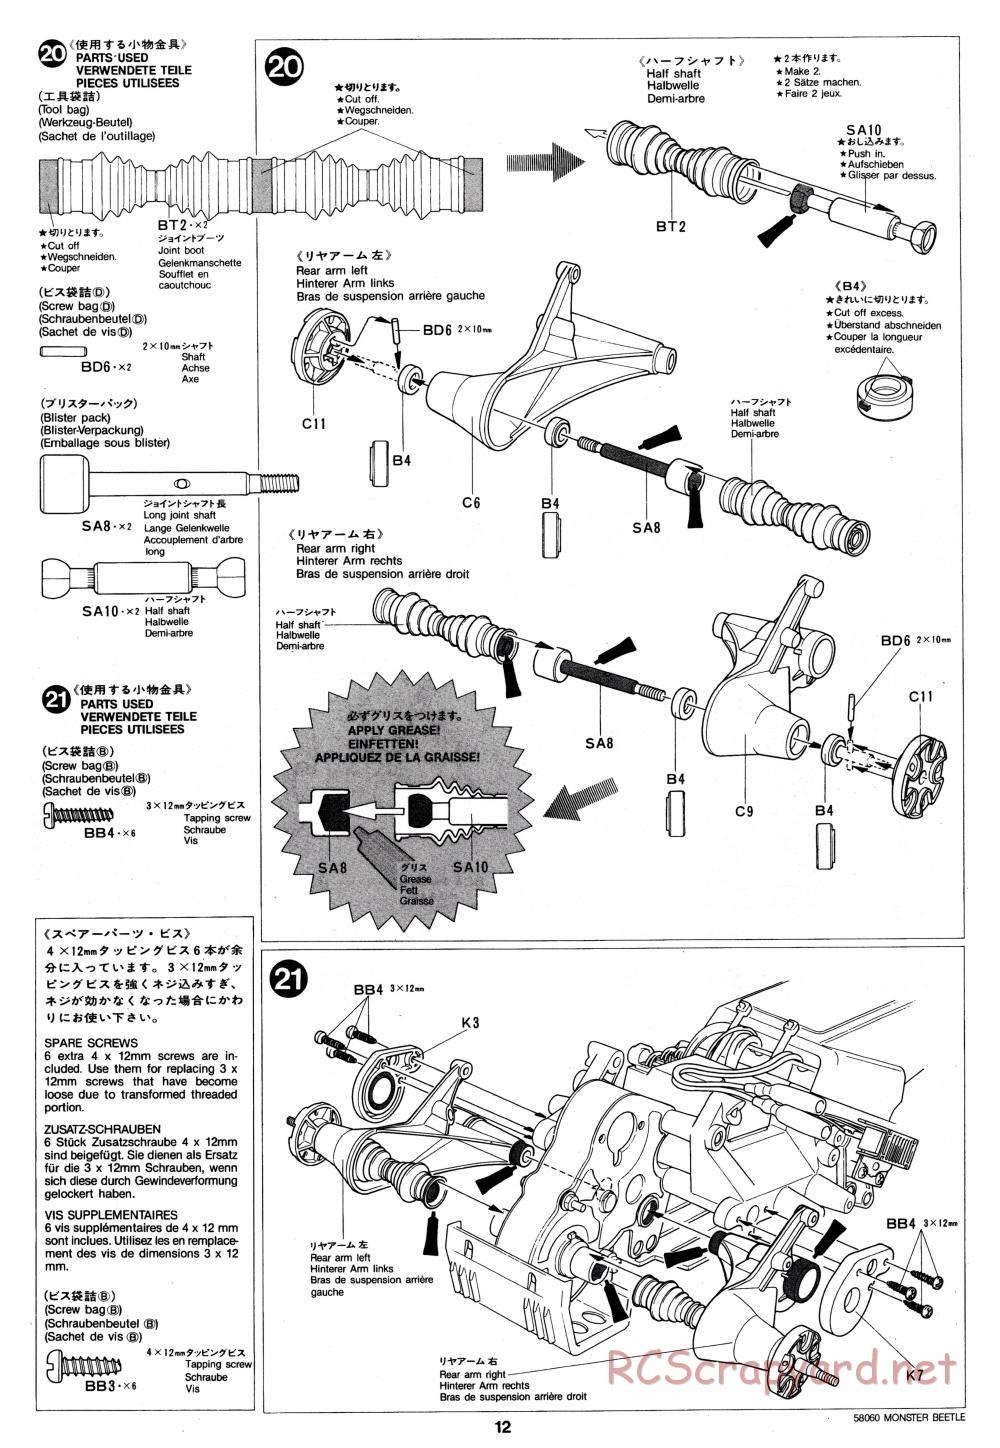 Tamiya - Monster Beetle - 58060 - Manual - Page 12